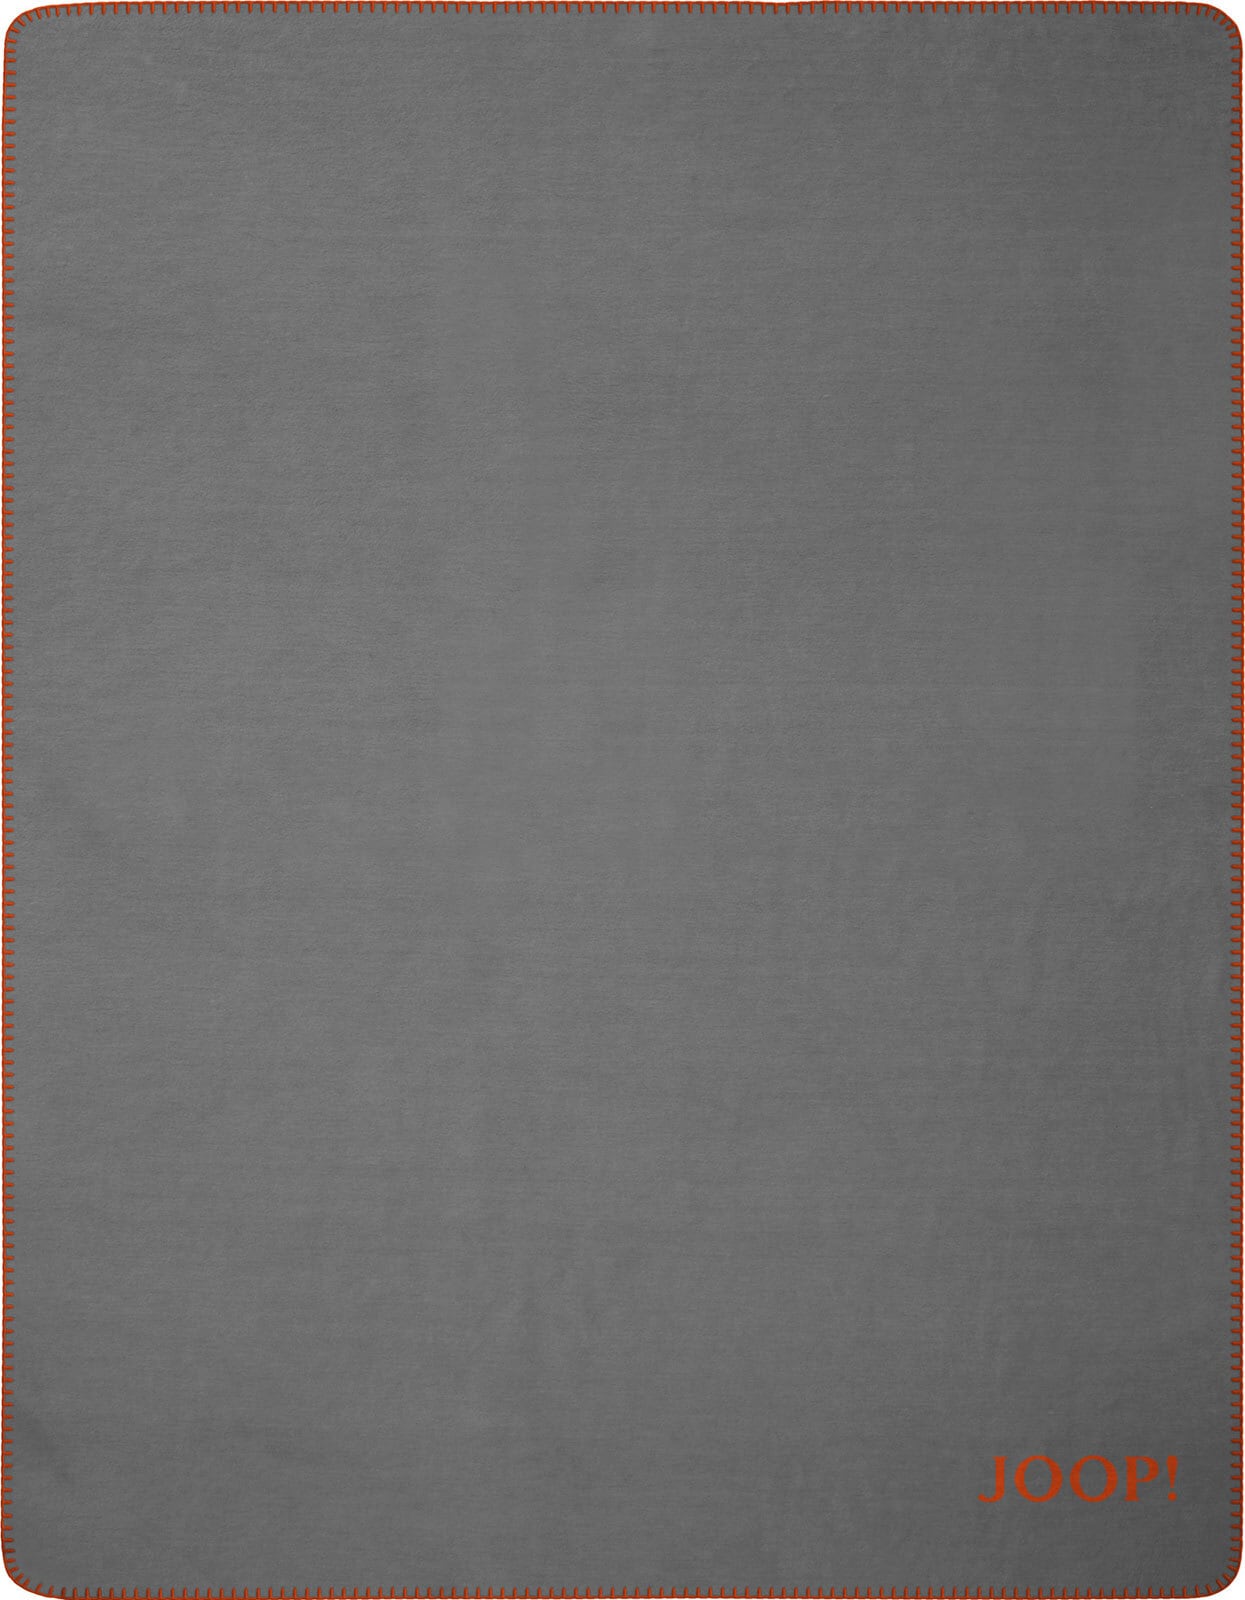 JOOP! Uni-Wohndecke DOUBLEFACE 150 x 200 cm grau/orange